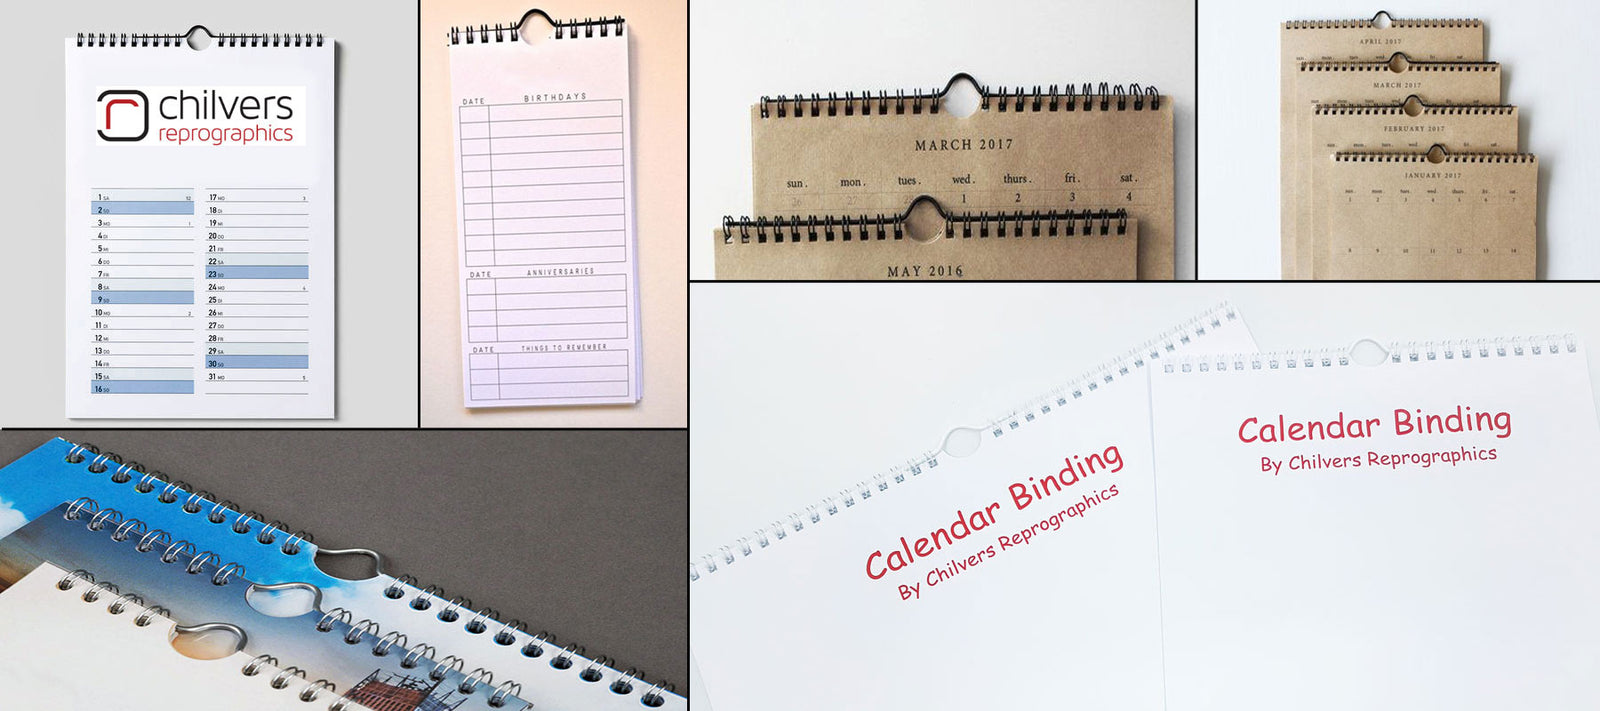 Calendar binding made easy